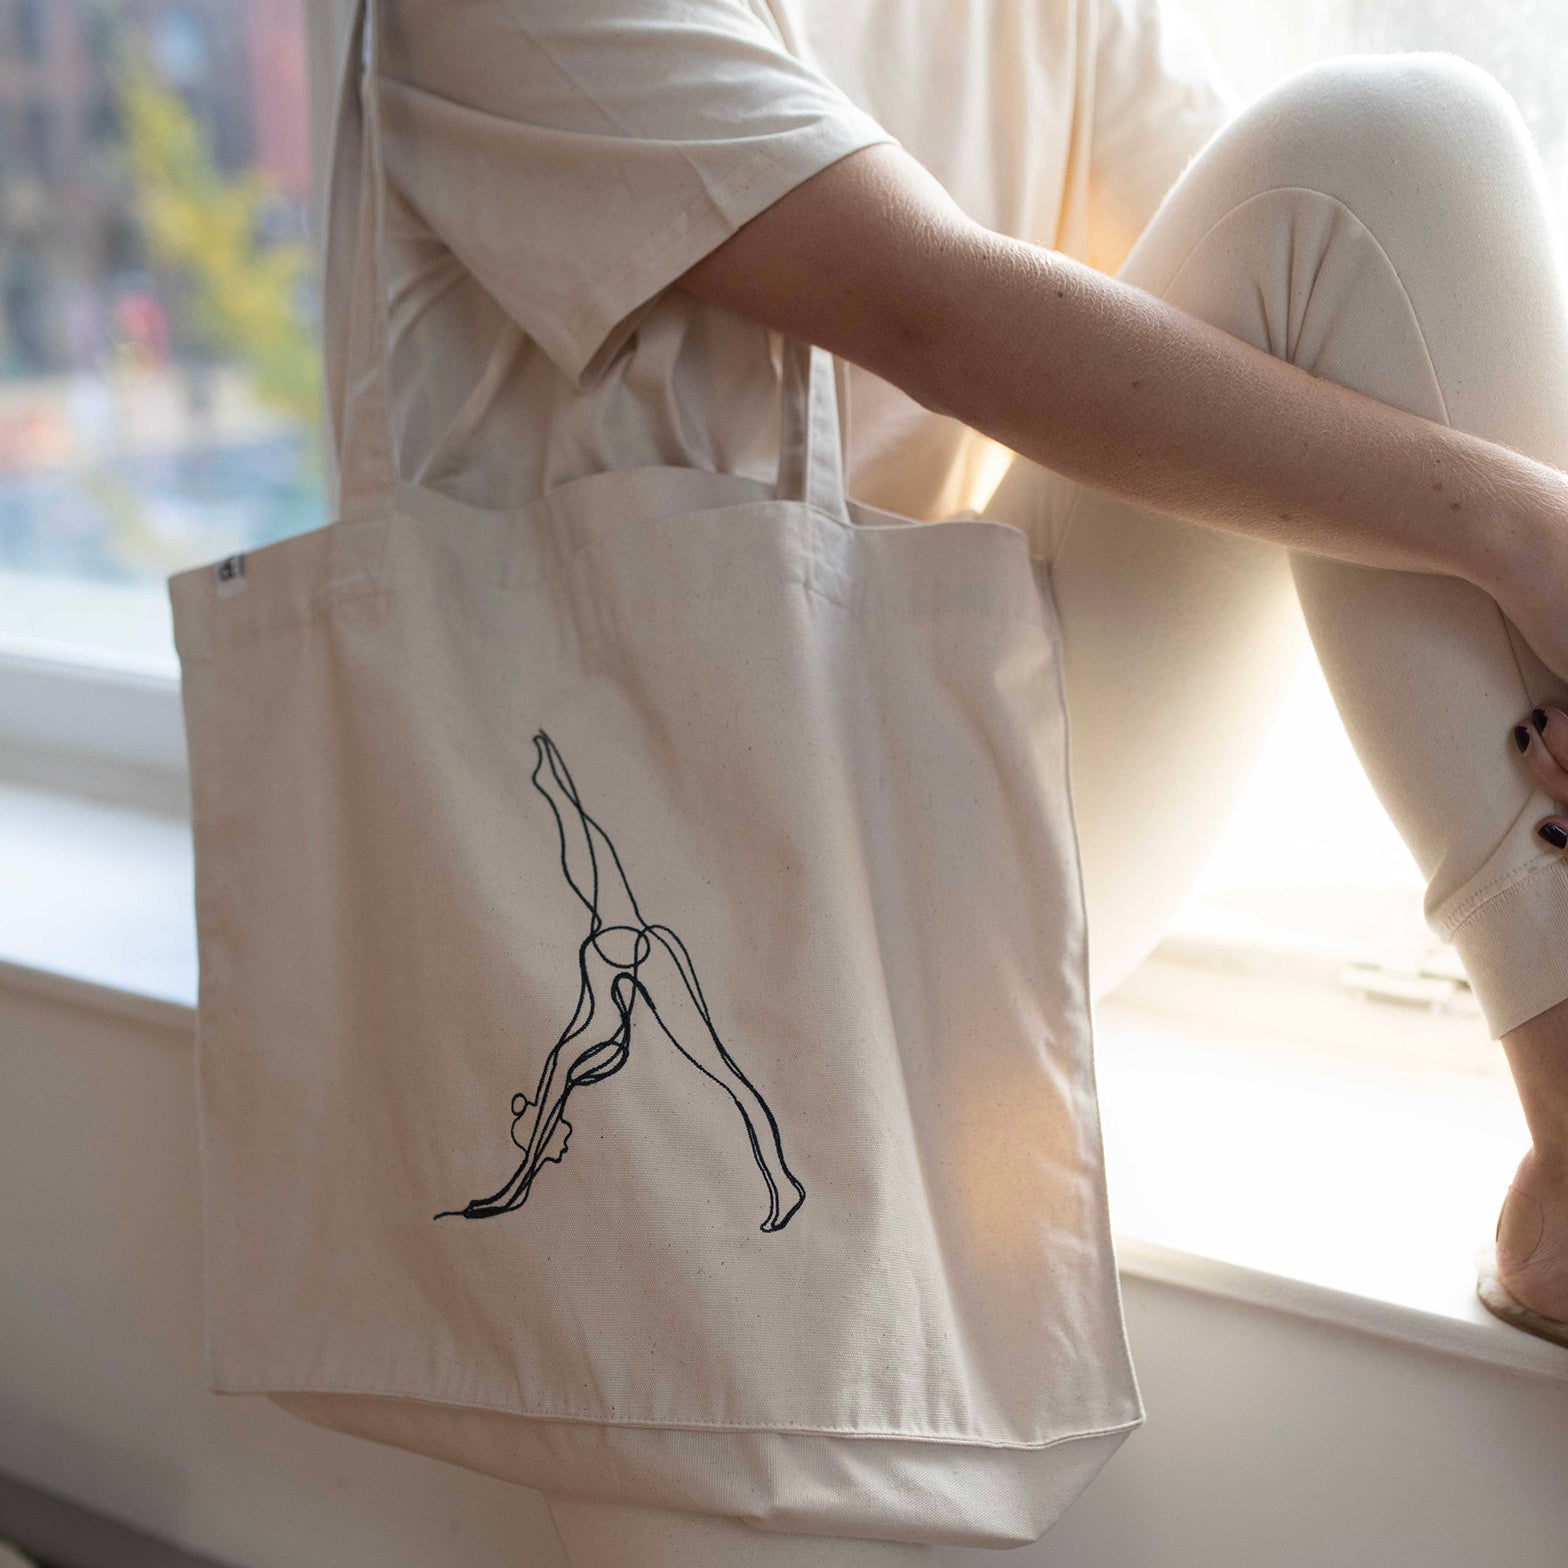 Cotton Canvas Yoga Tote Bag